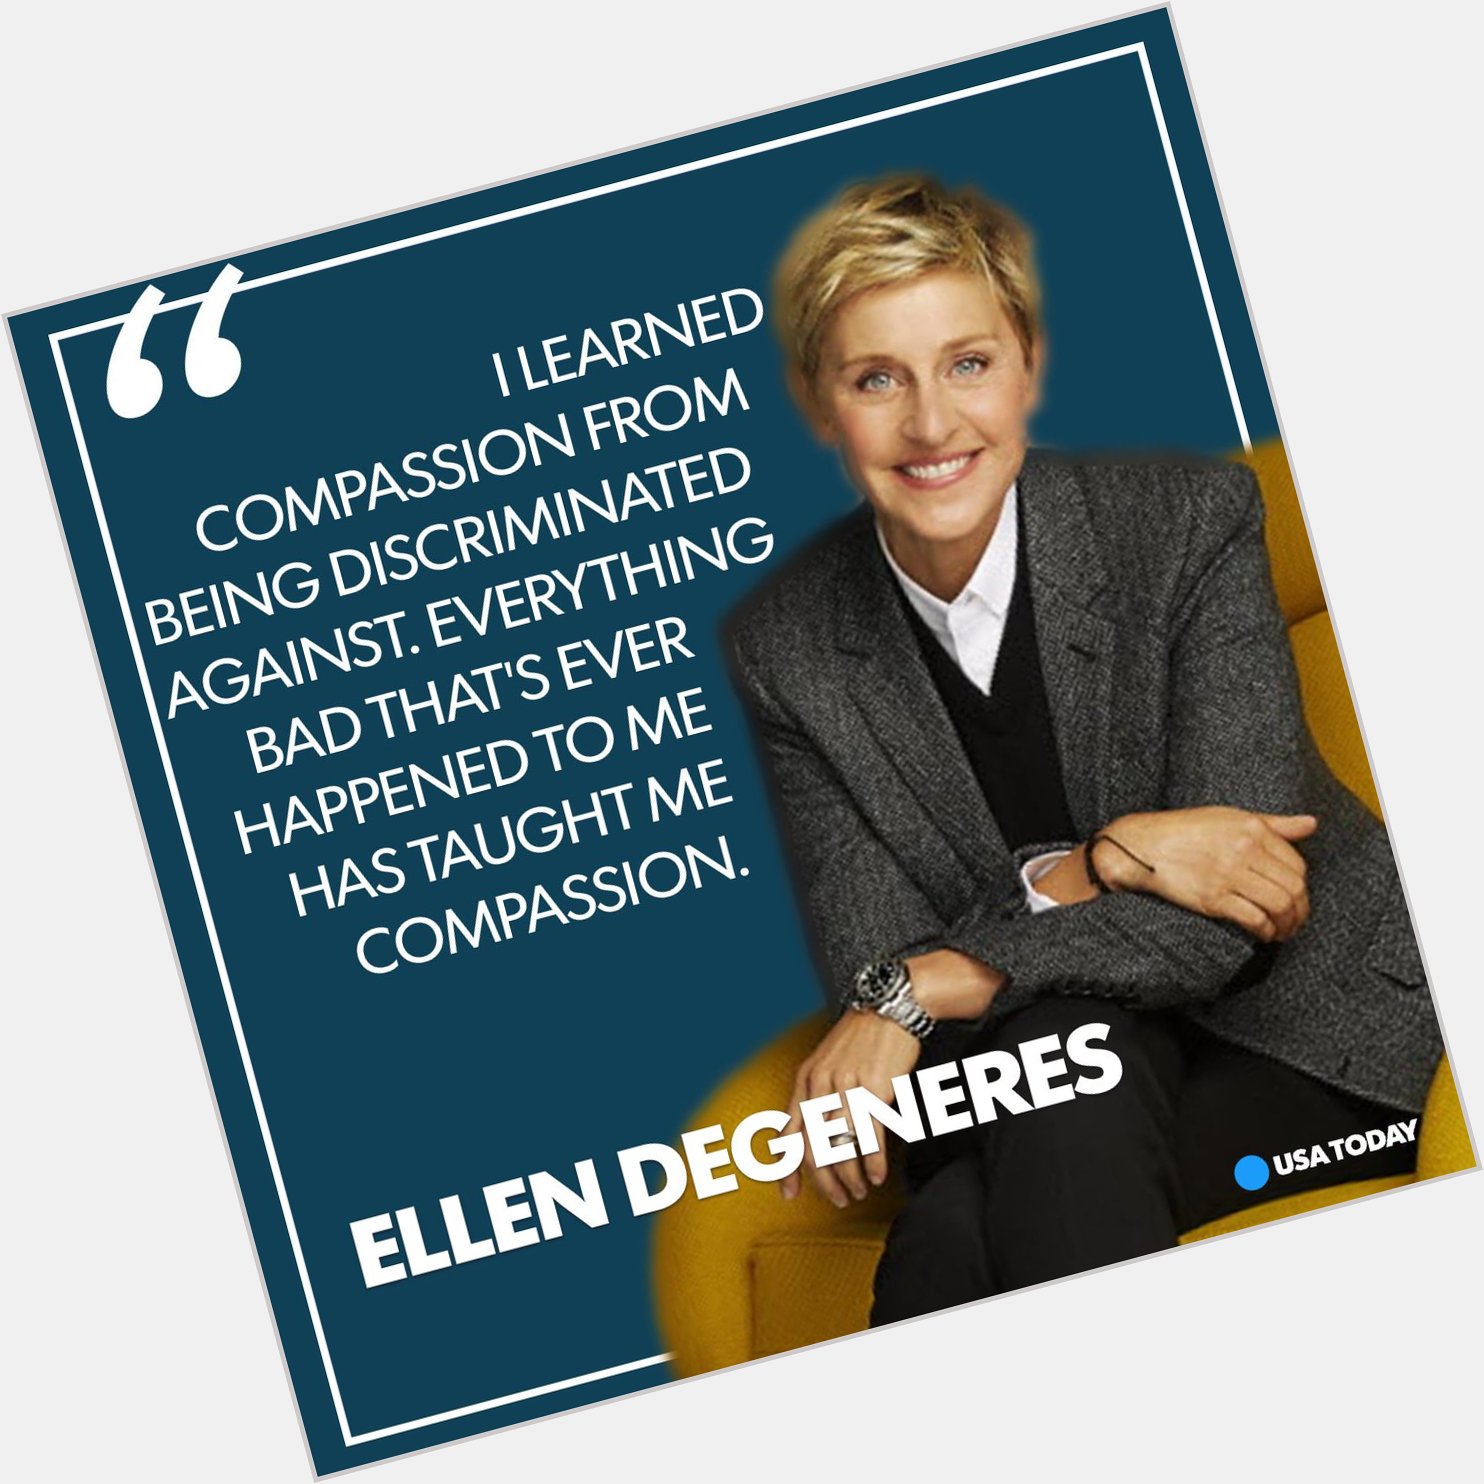 Happy 60th birthday, Ellen DeGeneres! 